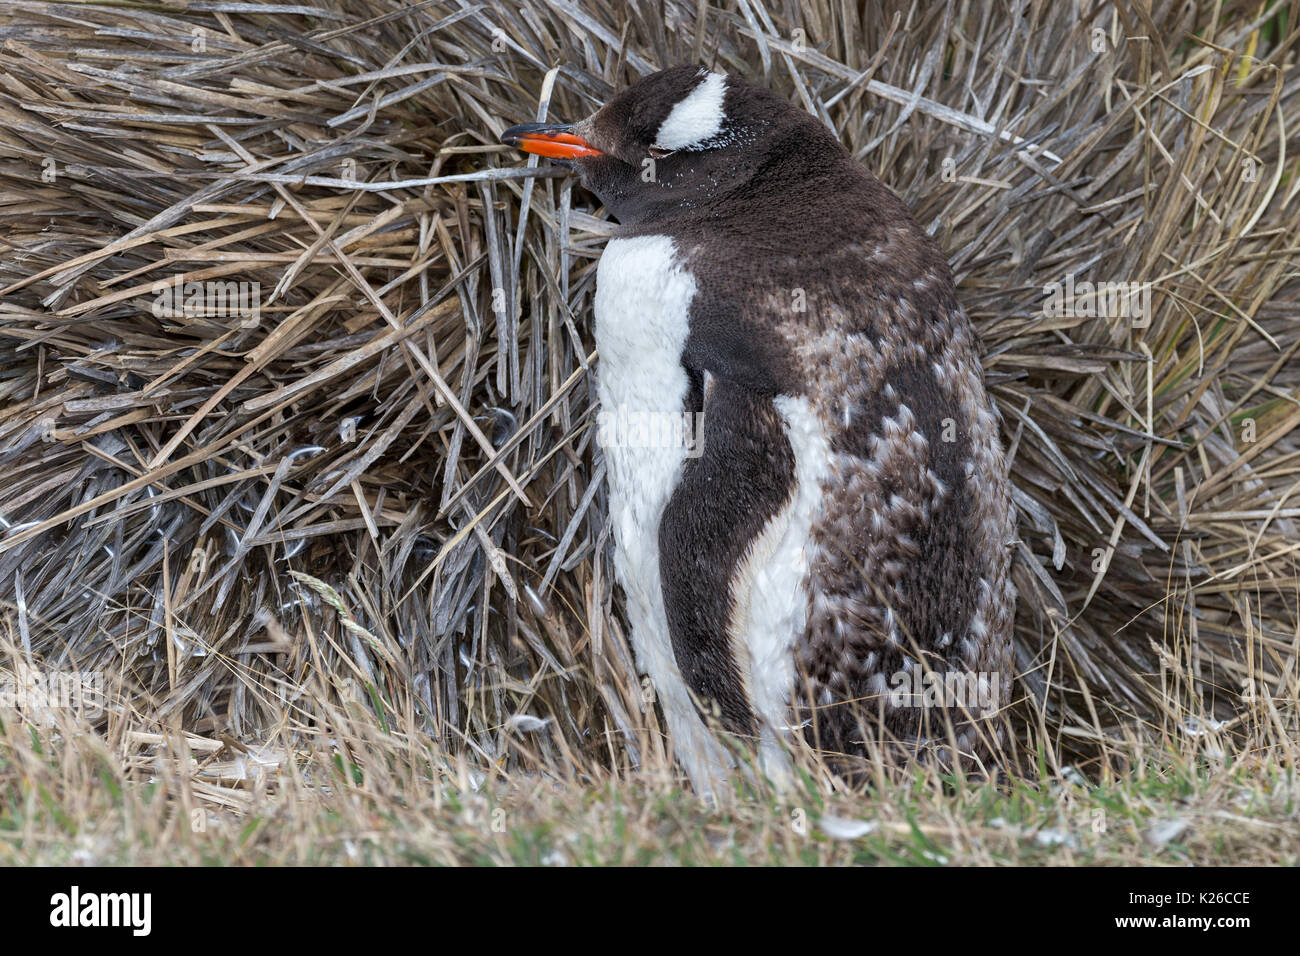 Gentoo penguin Pygoscelis papua moulting by Tussac grass Carcass Island Falklands Malvinas Stock Photo